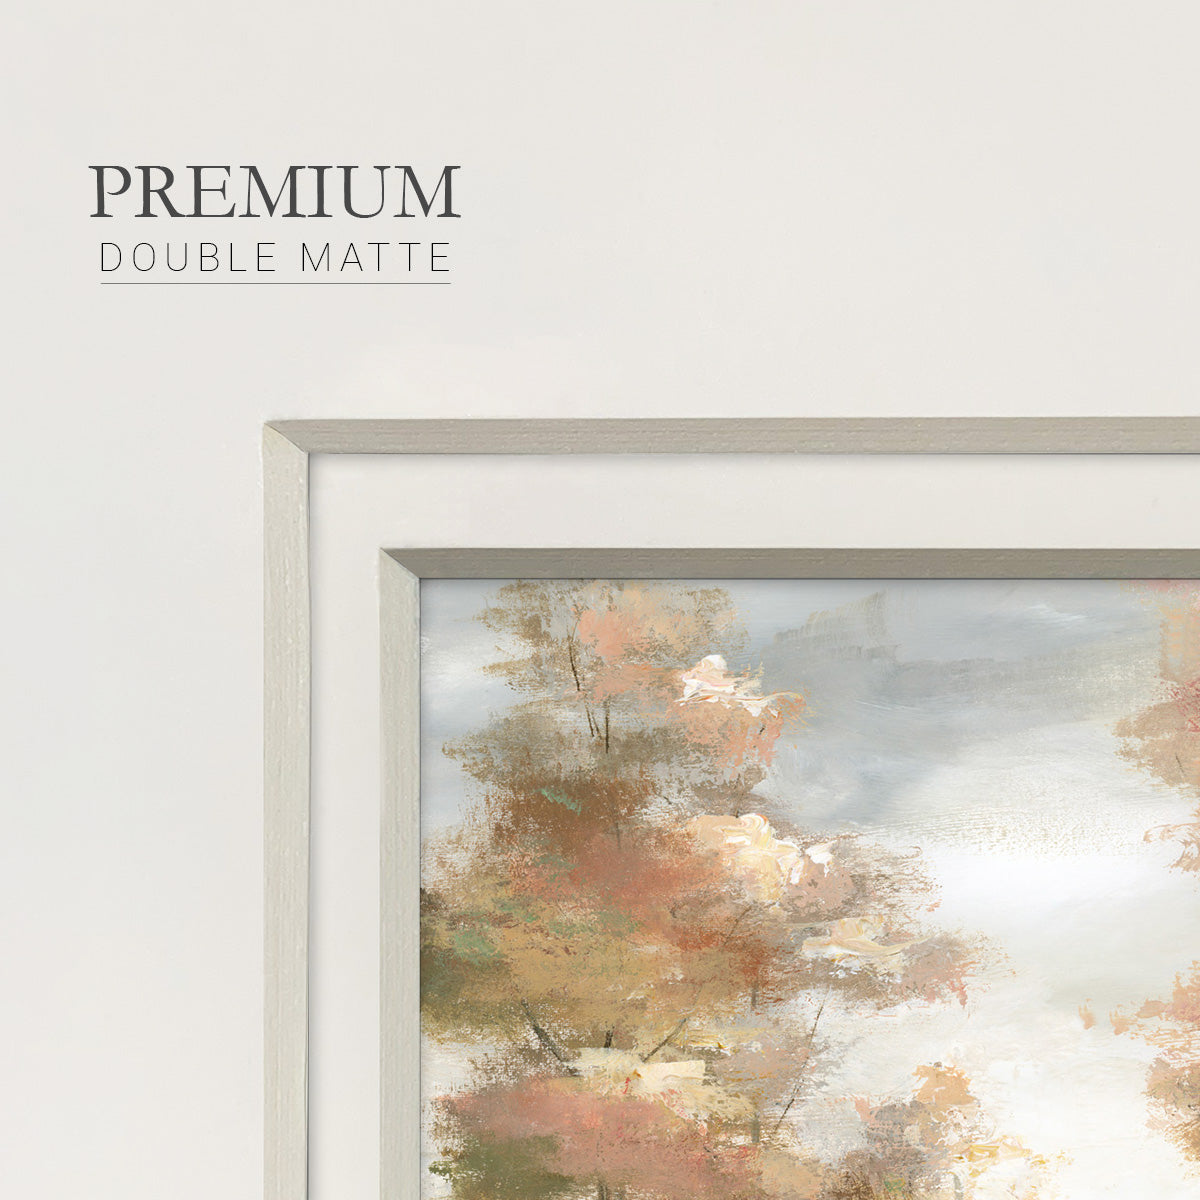 Pastel Park Premium Framed Print Double Matboard